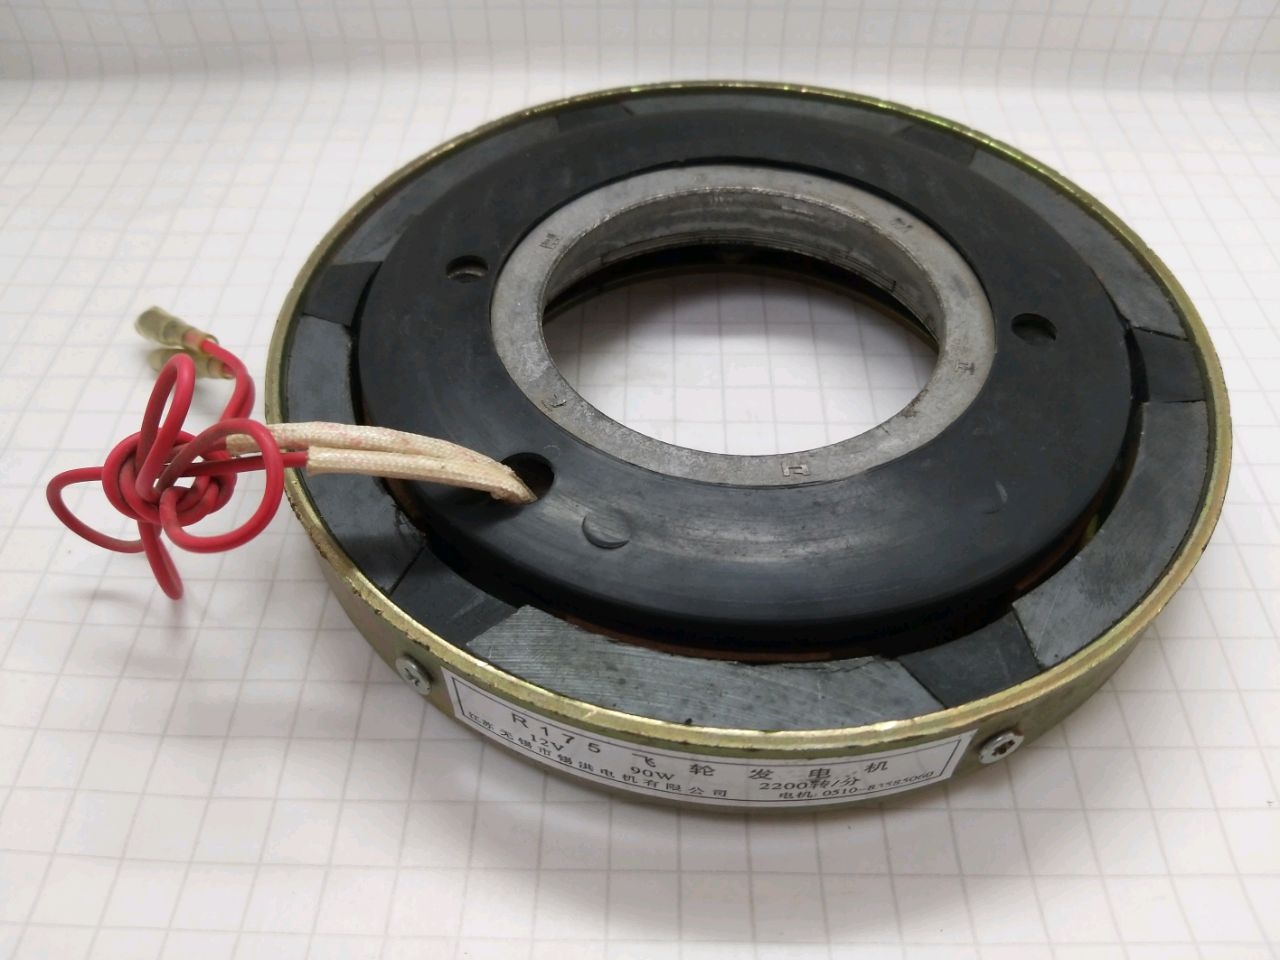 Stator cu rotor ansamblat